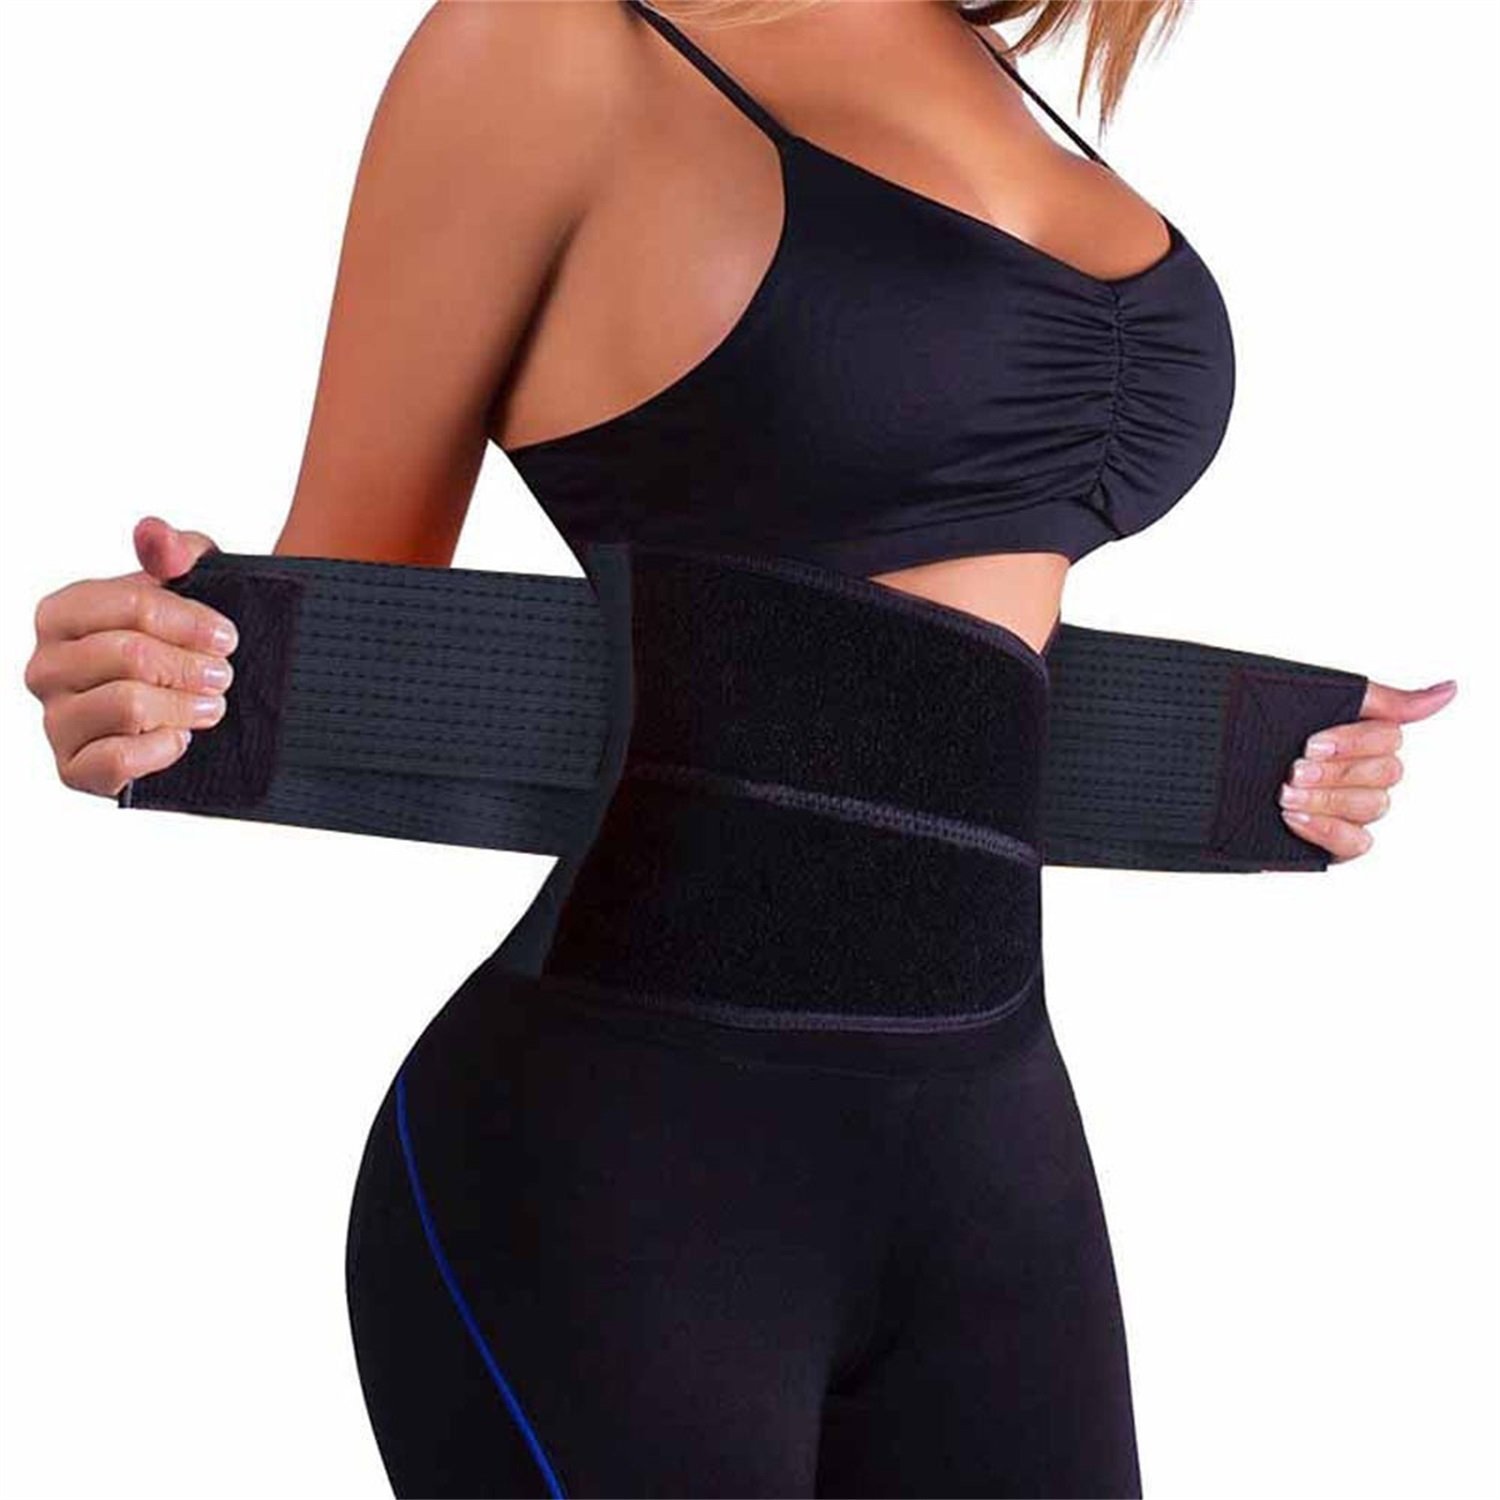 https://www.onlinemixmarket.com/wp-content/uploads/2019/07/Waist-Trimmer-Belt-for-Women-Size-Extra-Large-Waist-31.5-to-35.4-inches-Color-Black.jpg